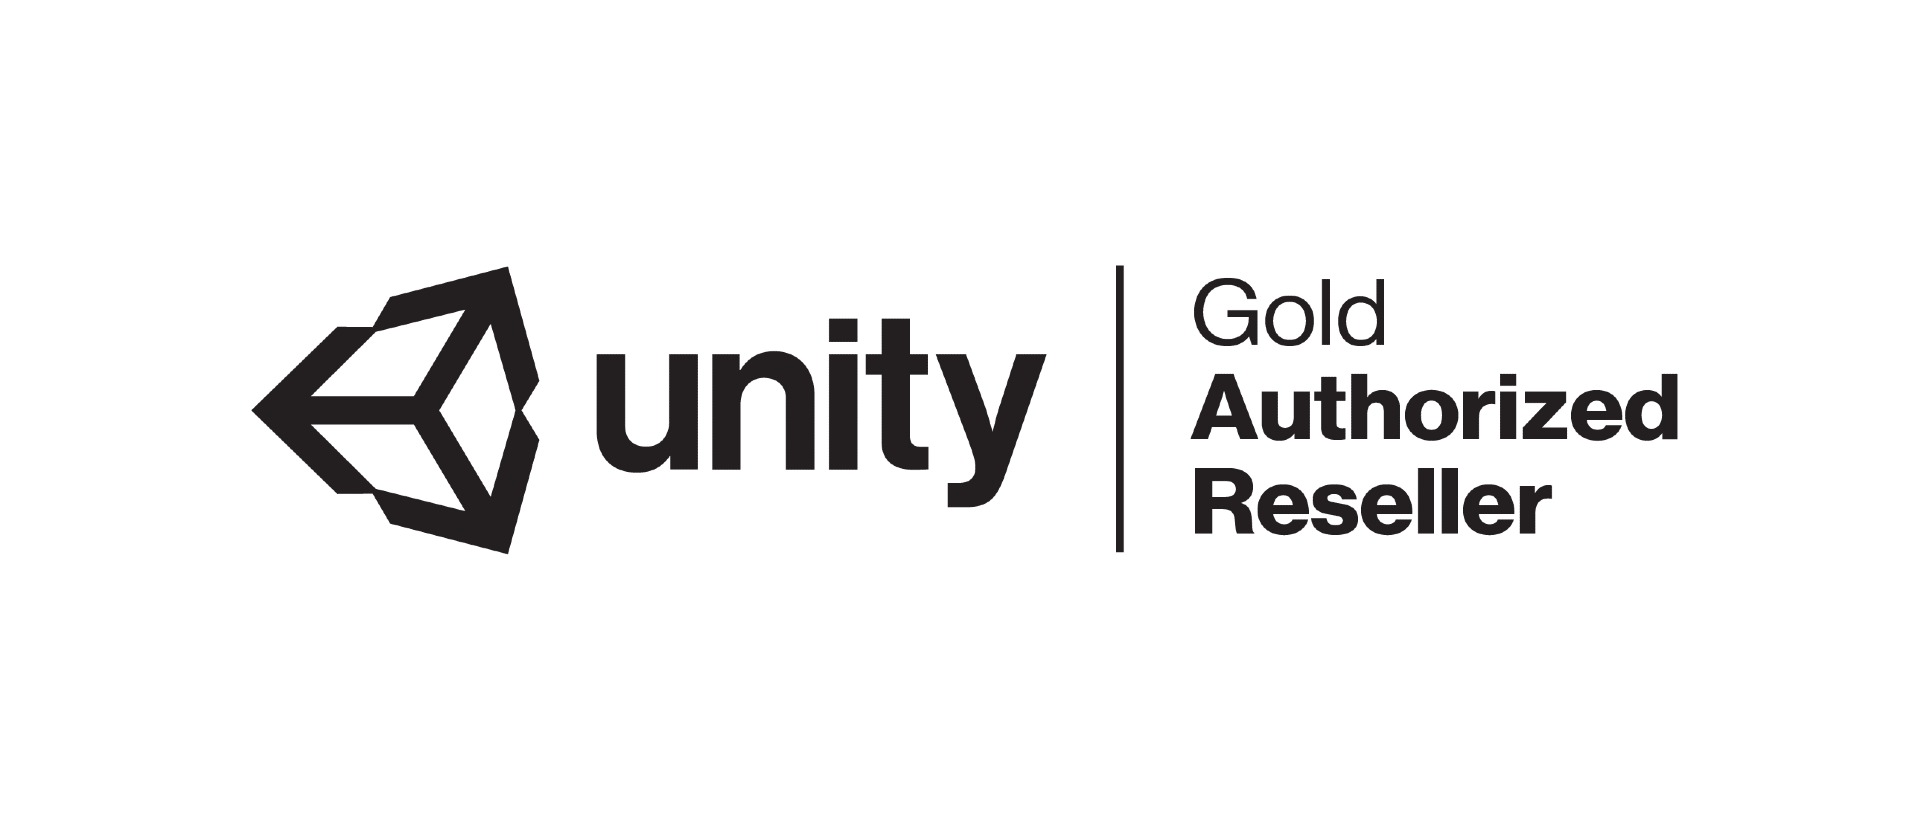 unity gold authorised reseller uk landscape afeae